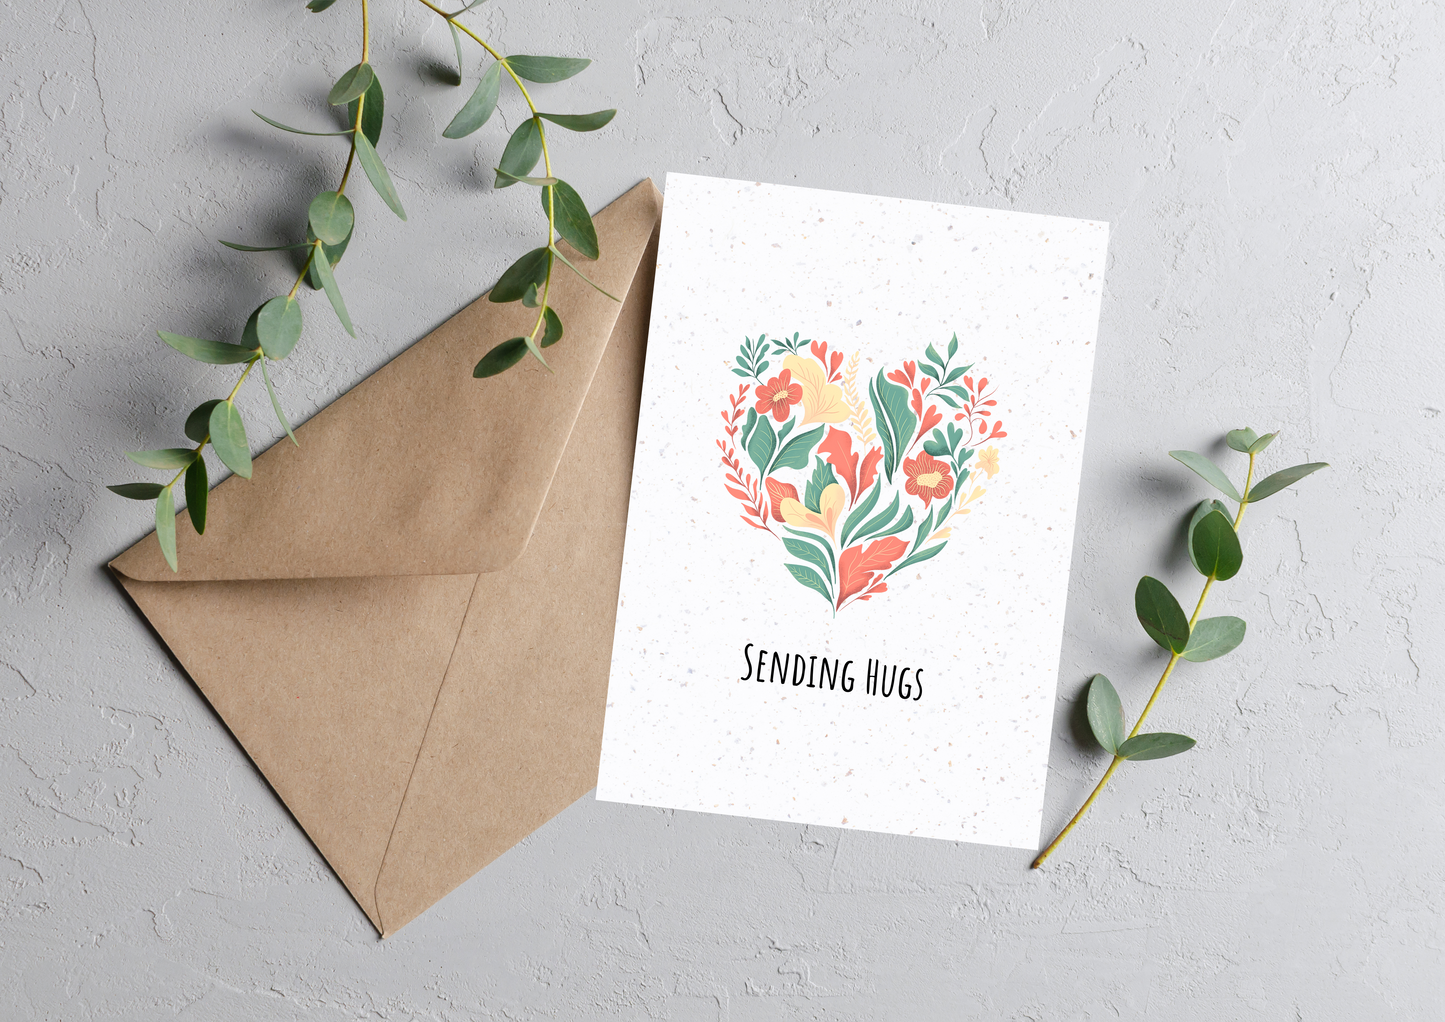 Sending Hugs 2  - Personalized Seed Paper Greeting Card